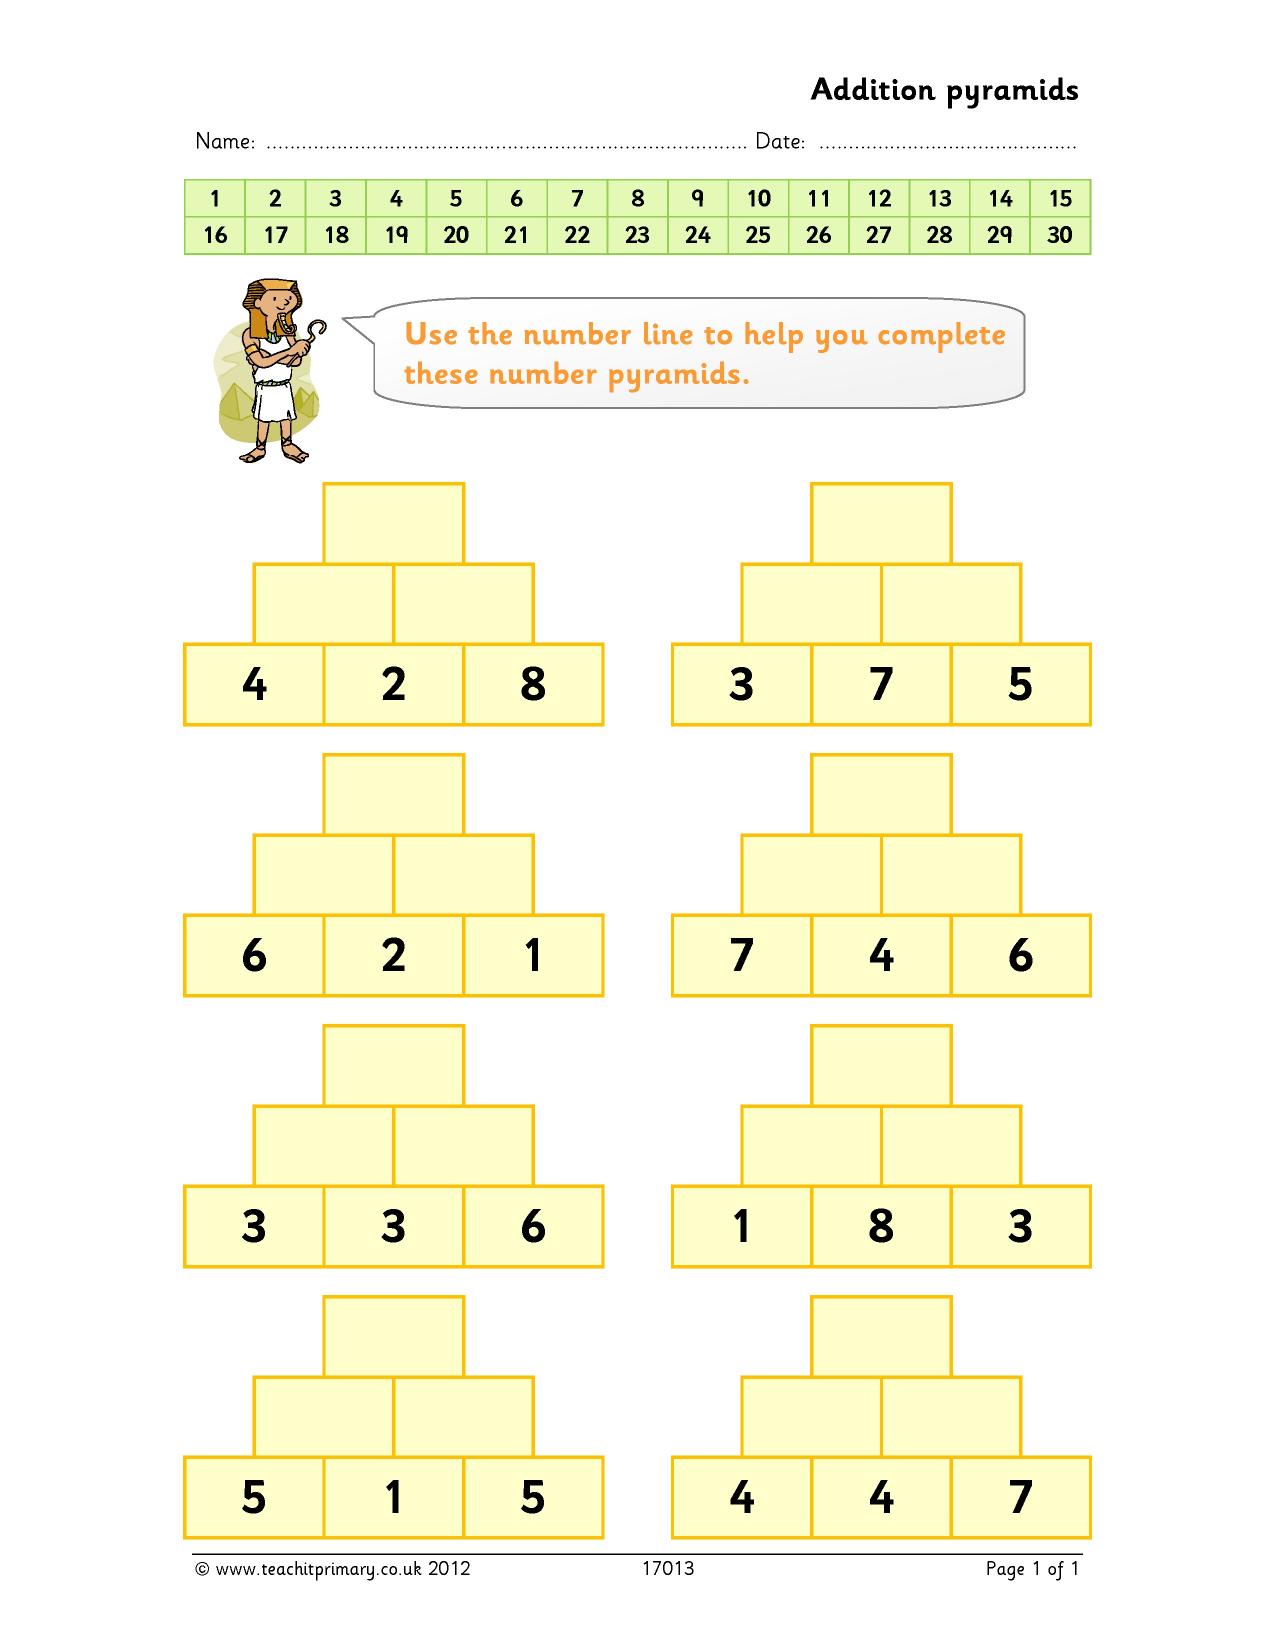 addition-pyramids-to-30-ks1-maths-teachit